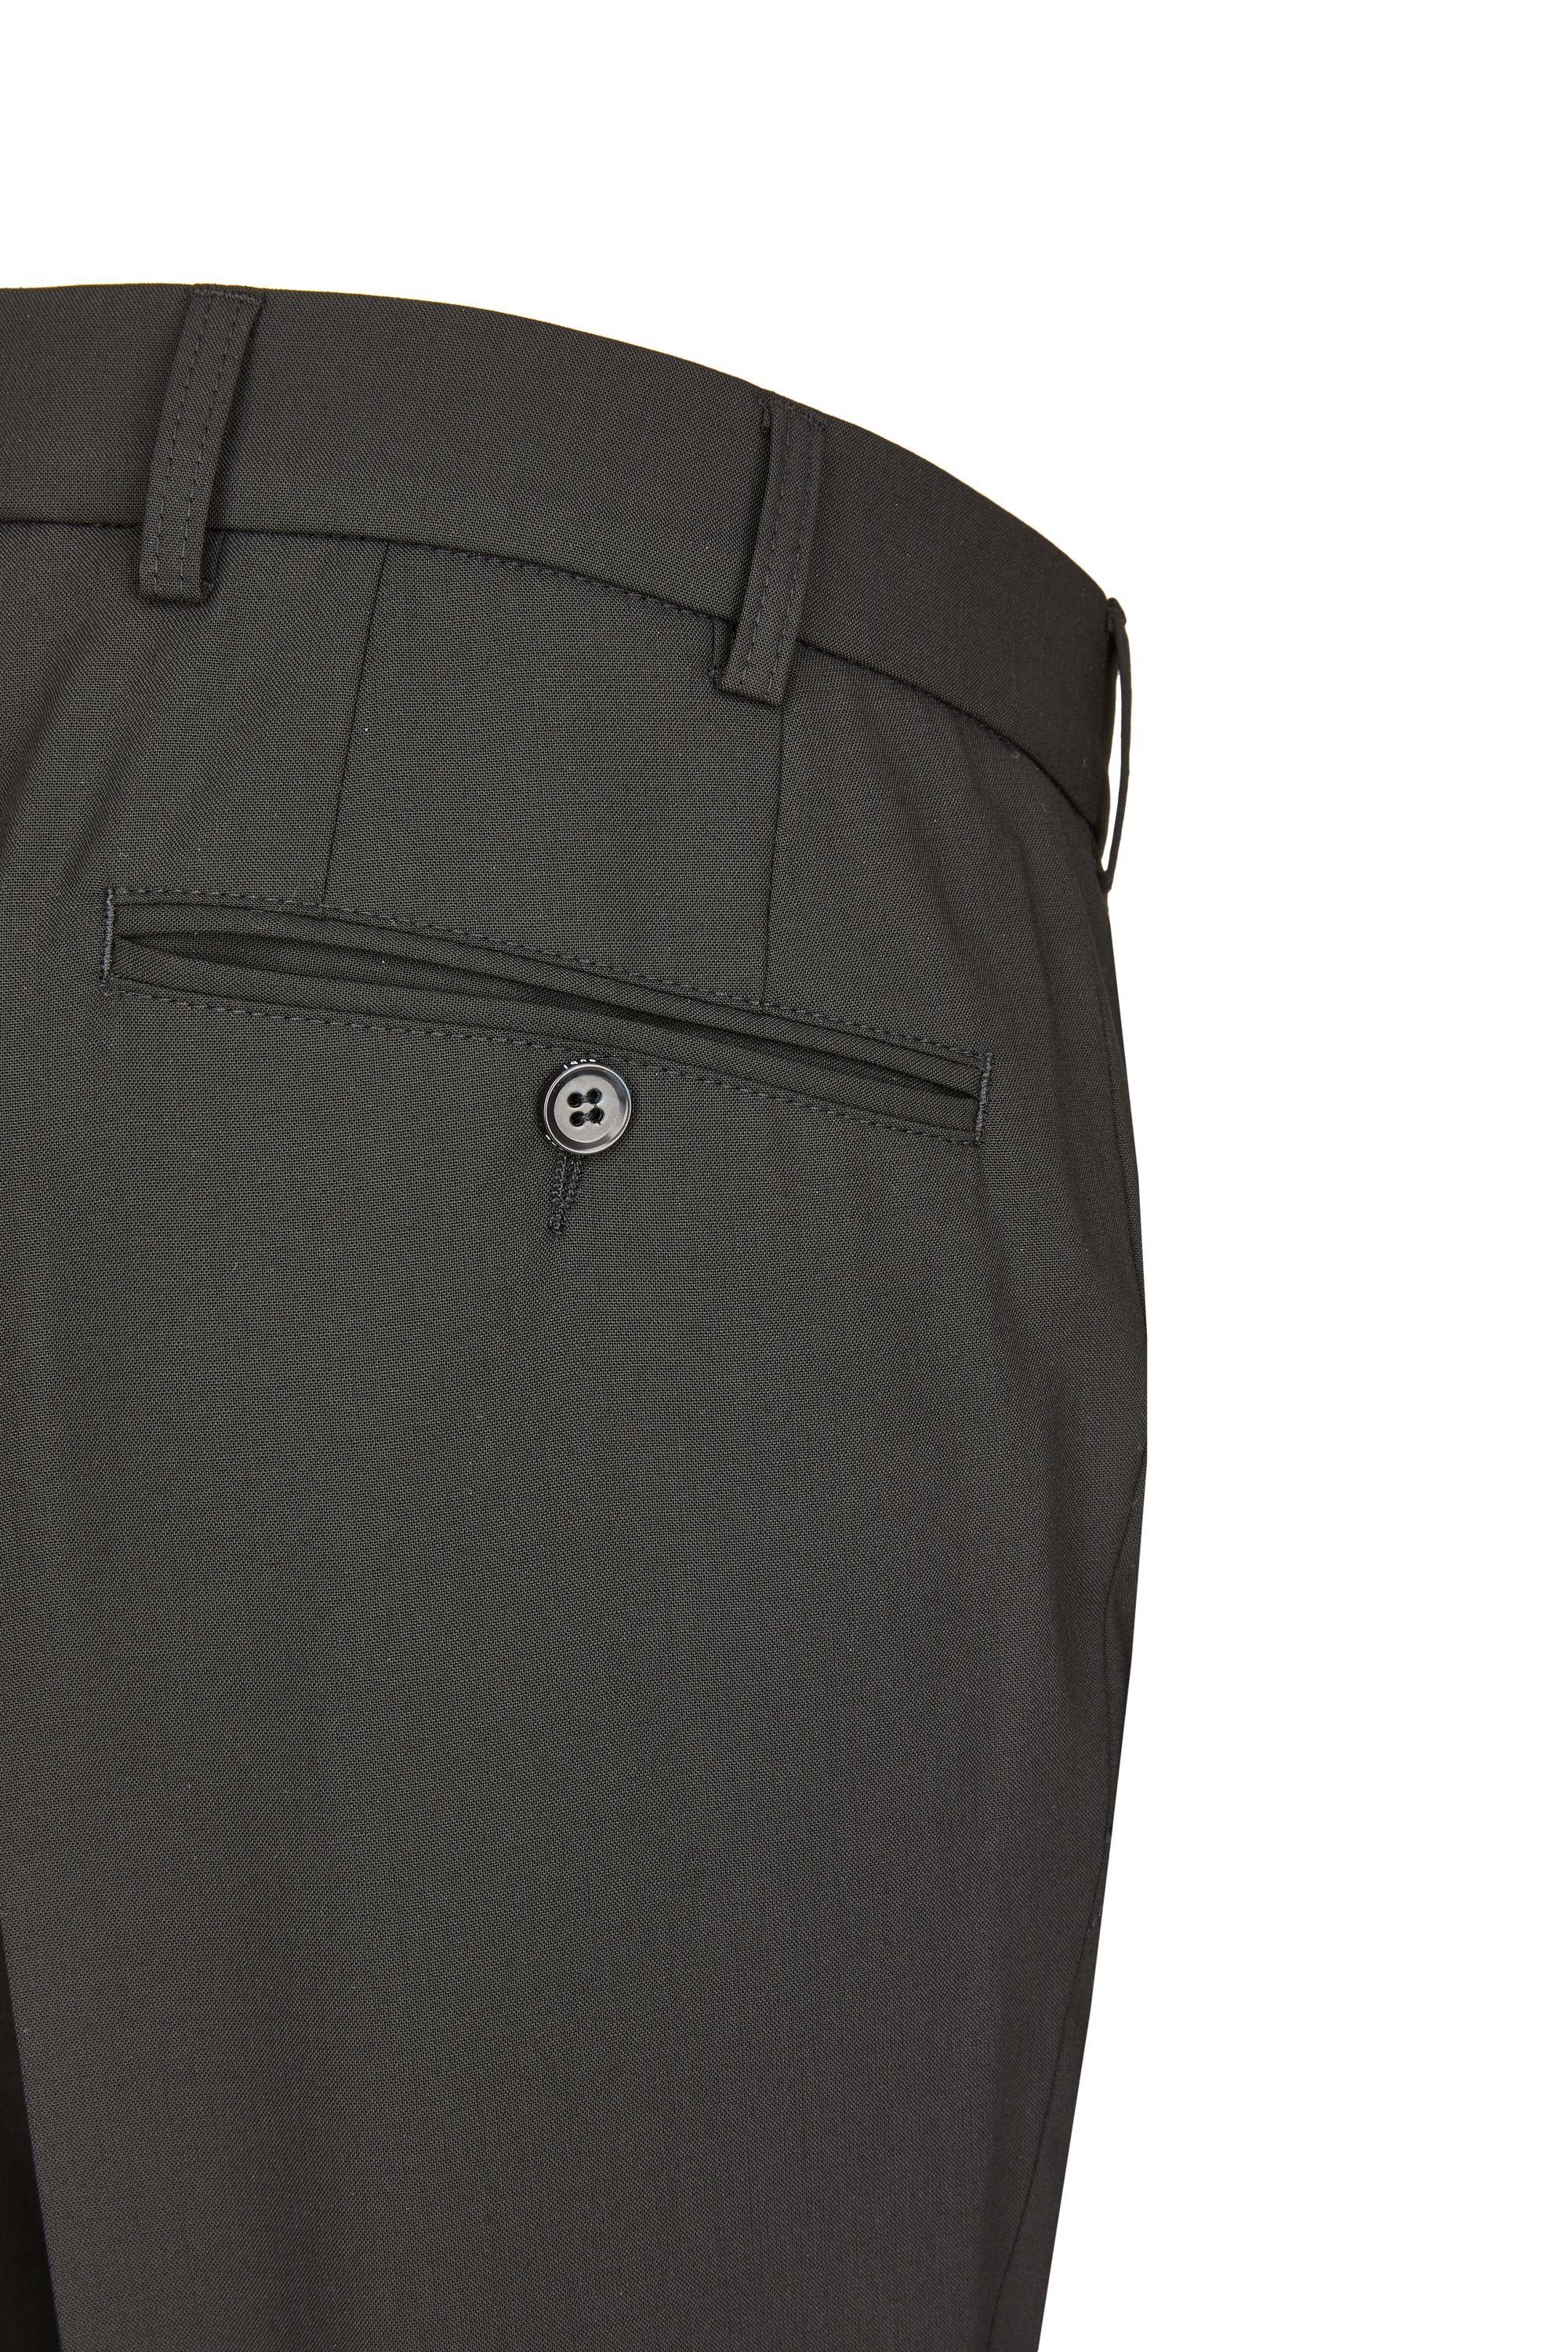 (50) Cool schwarz Perfect Anzughose Businesshose Front Finish Sommer Herren Fit Flat 26 Stoffhose aubi aubi: Modell